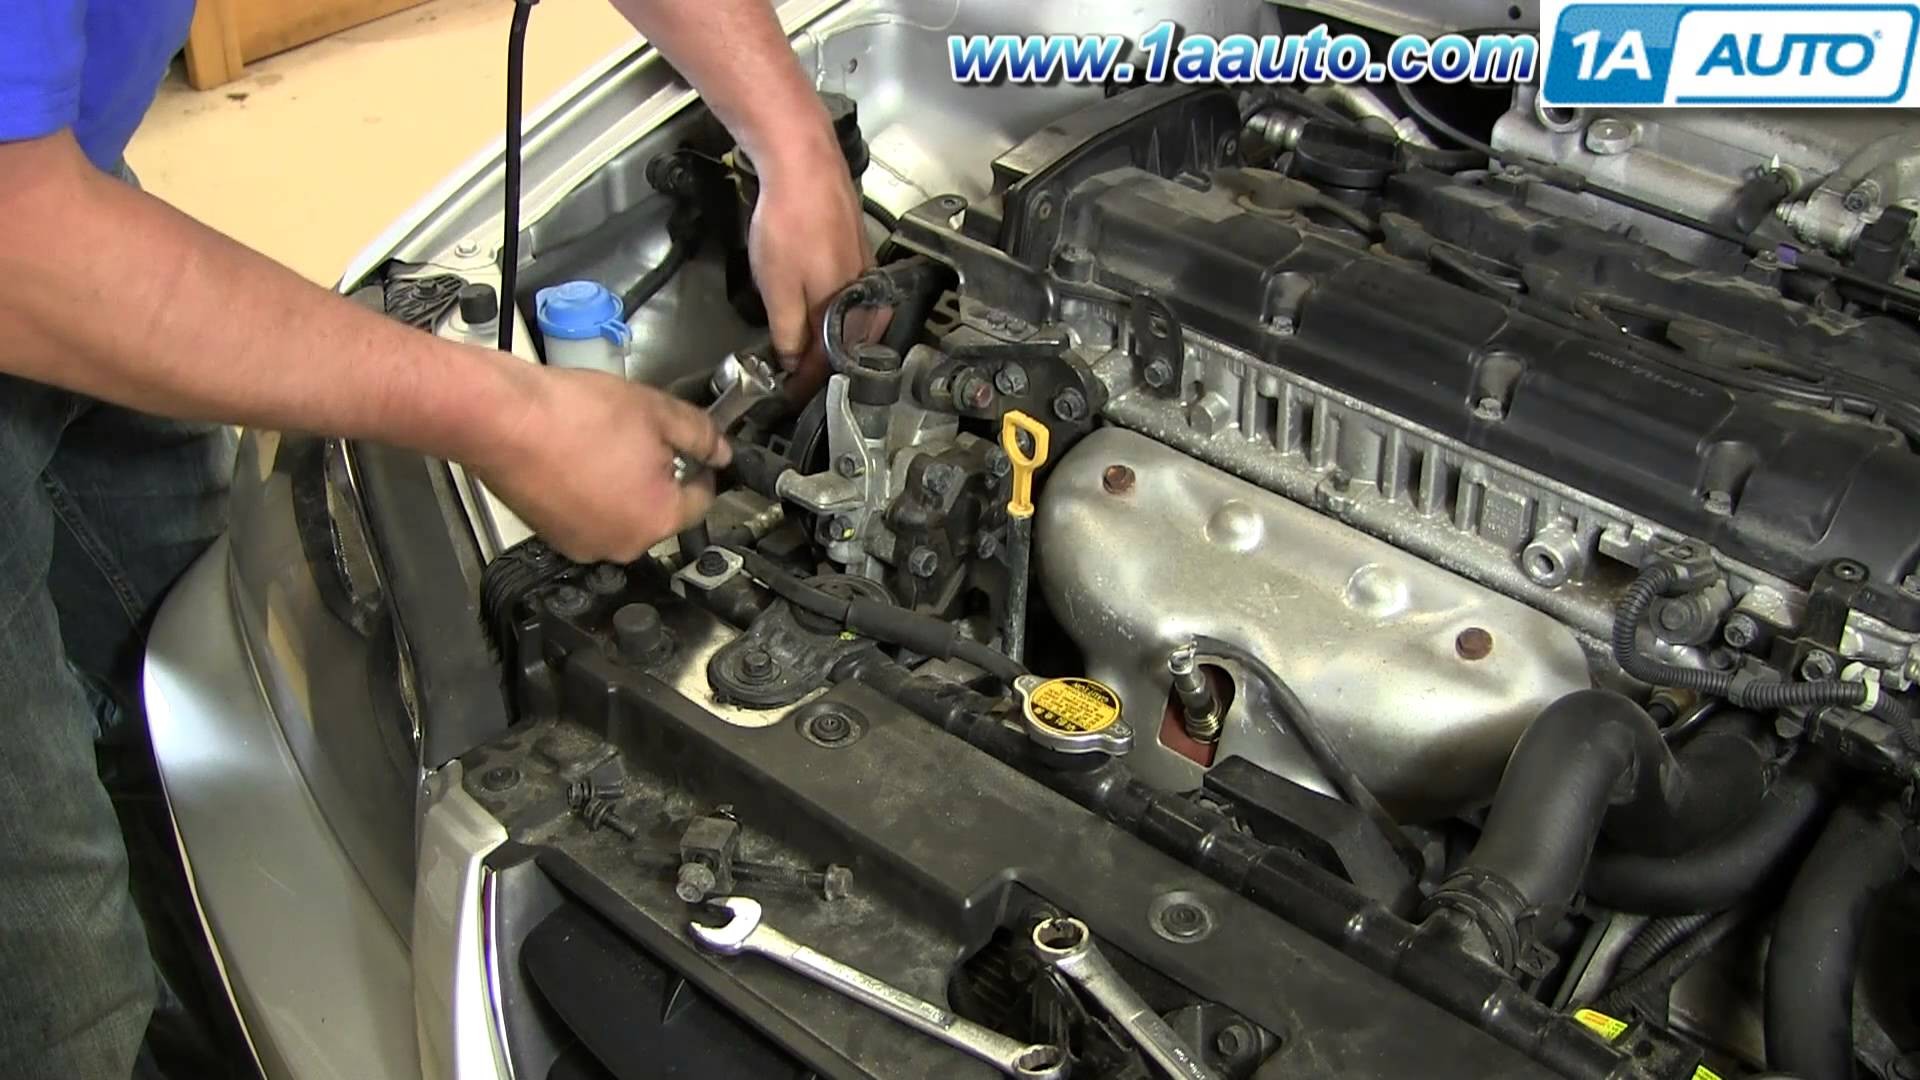 2002 Hyundai Elantra Engine Diagram How to Install Replace Power Steering Belt 2001 06 Hyundai Elantra Of 2002 Hyundai Elantra Engine Diagram